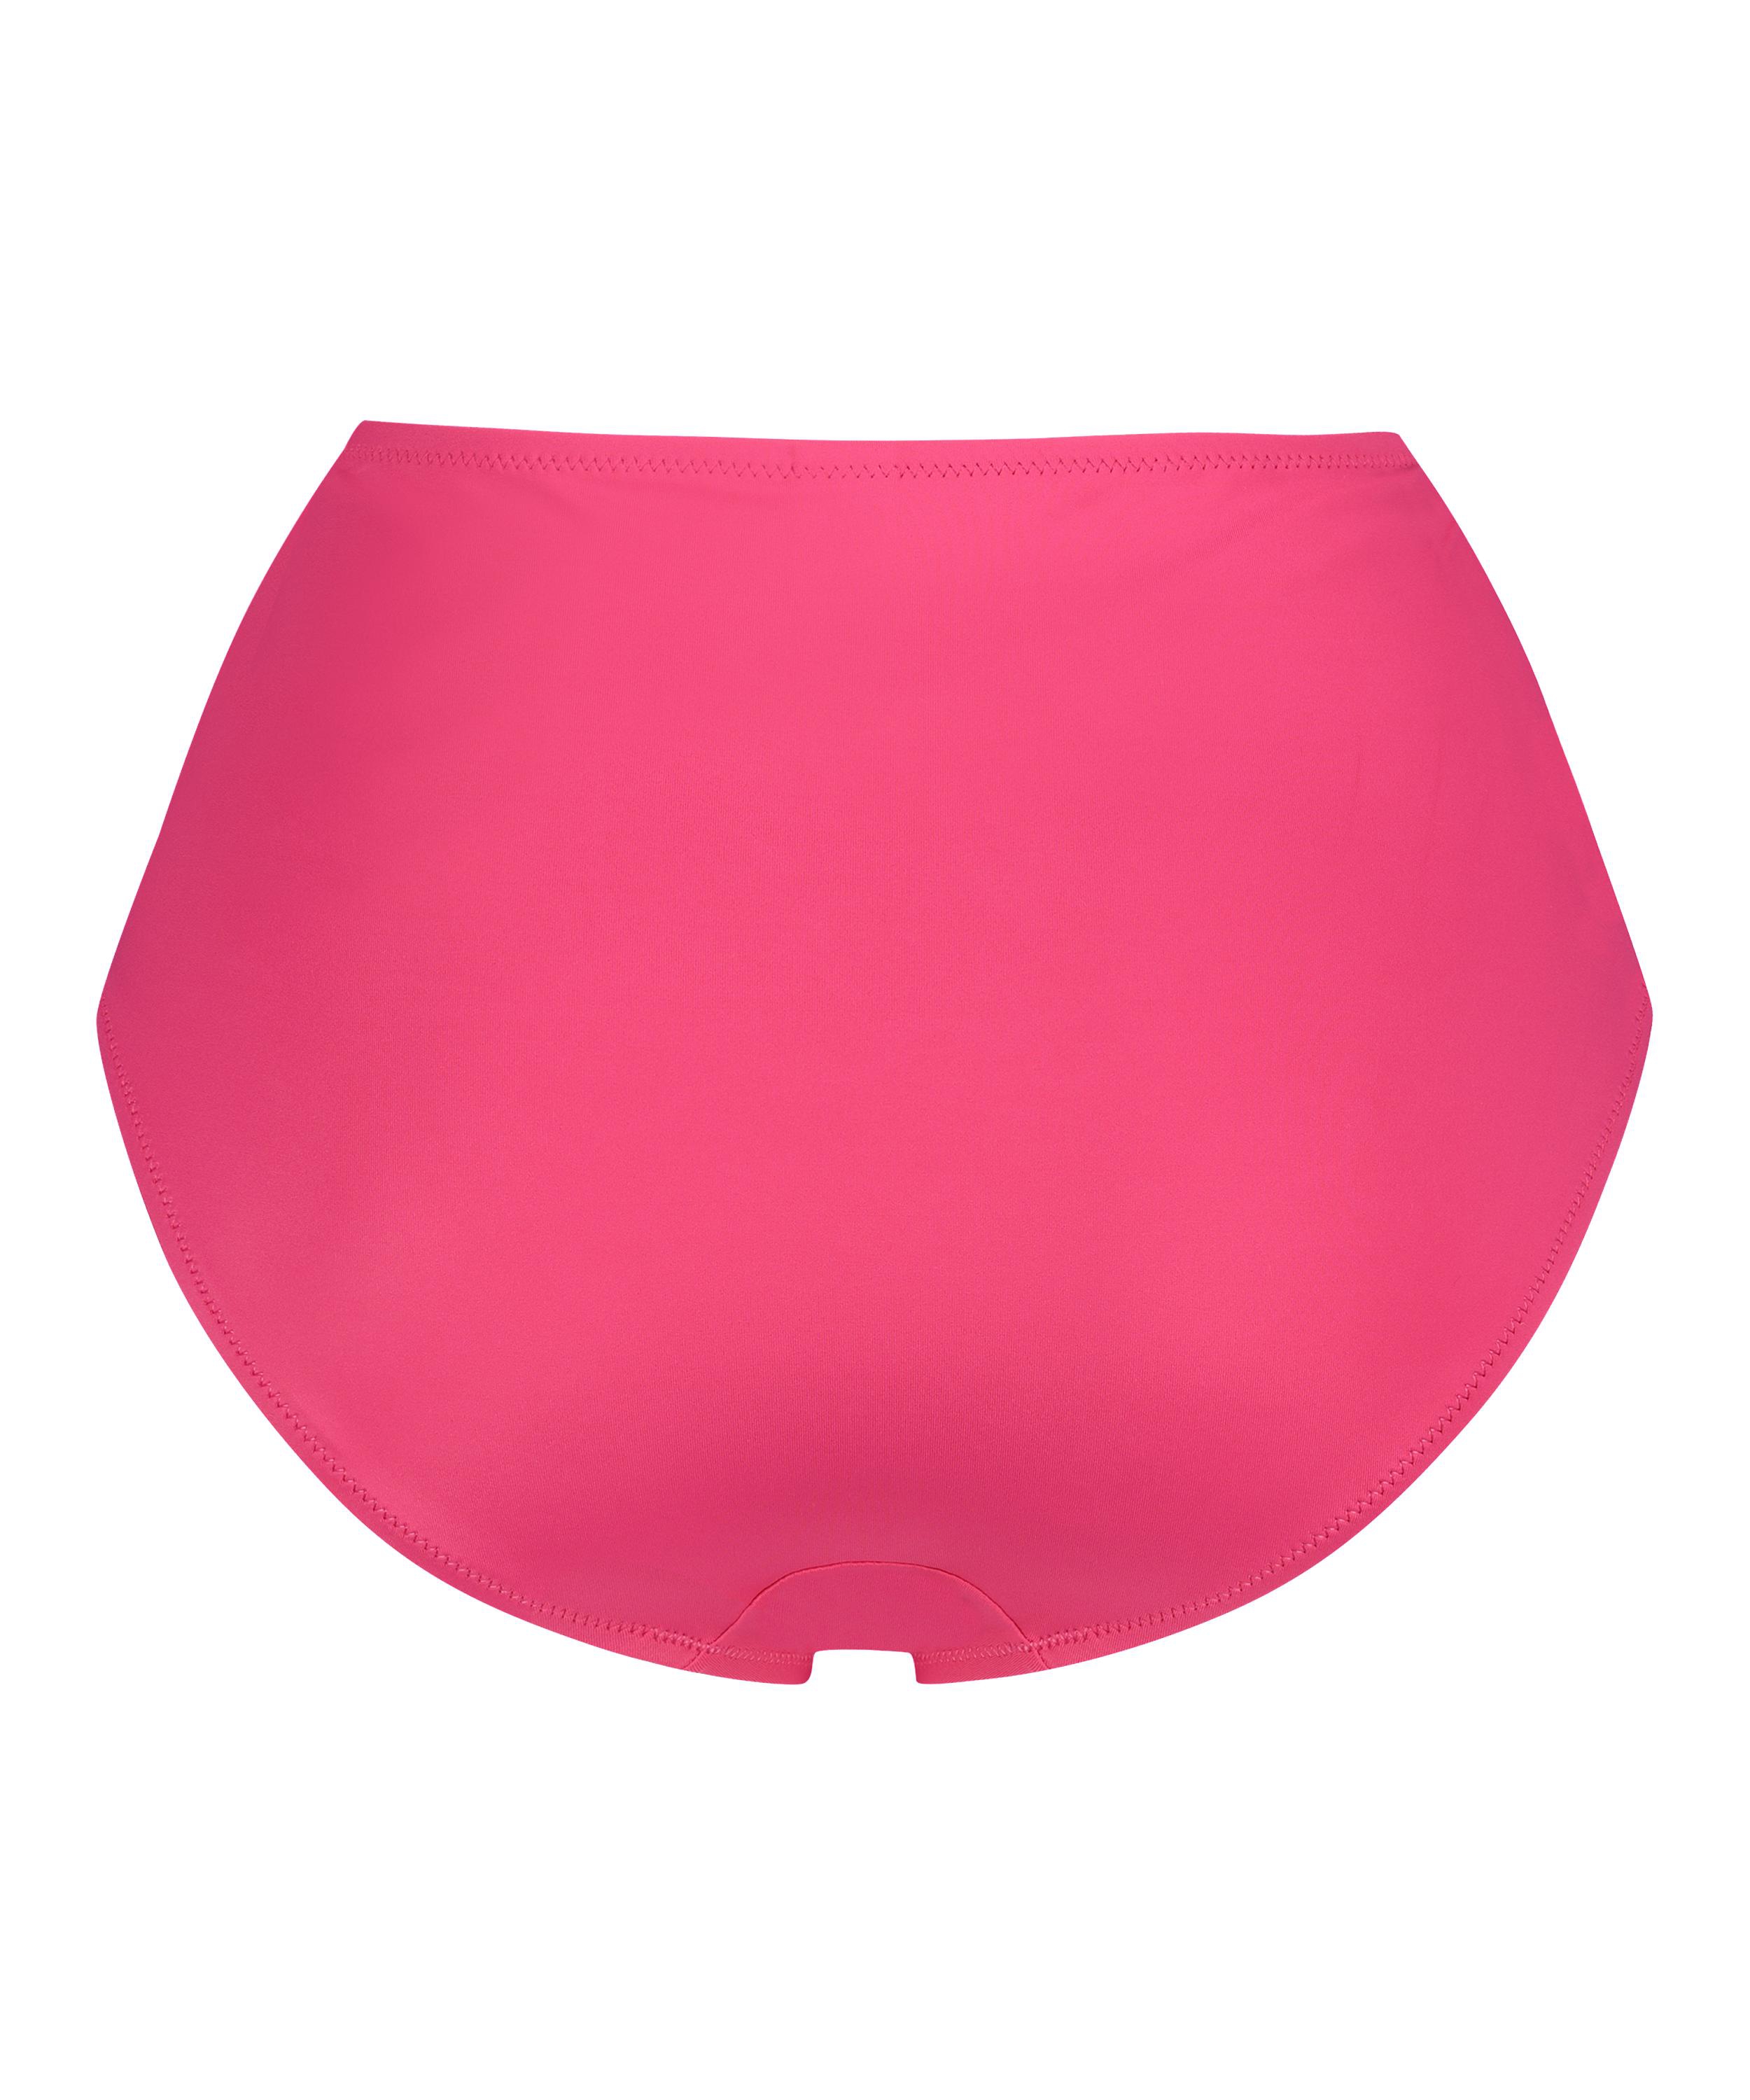 Rio Deluxe High Waisted Bikini Bottoms, Pink, main